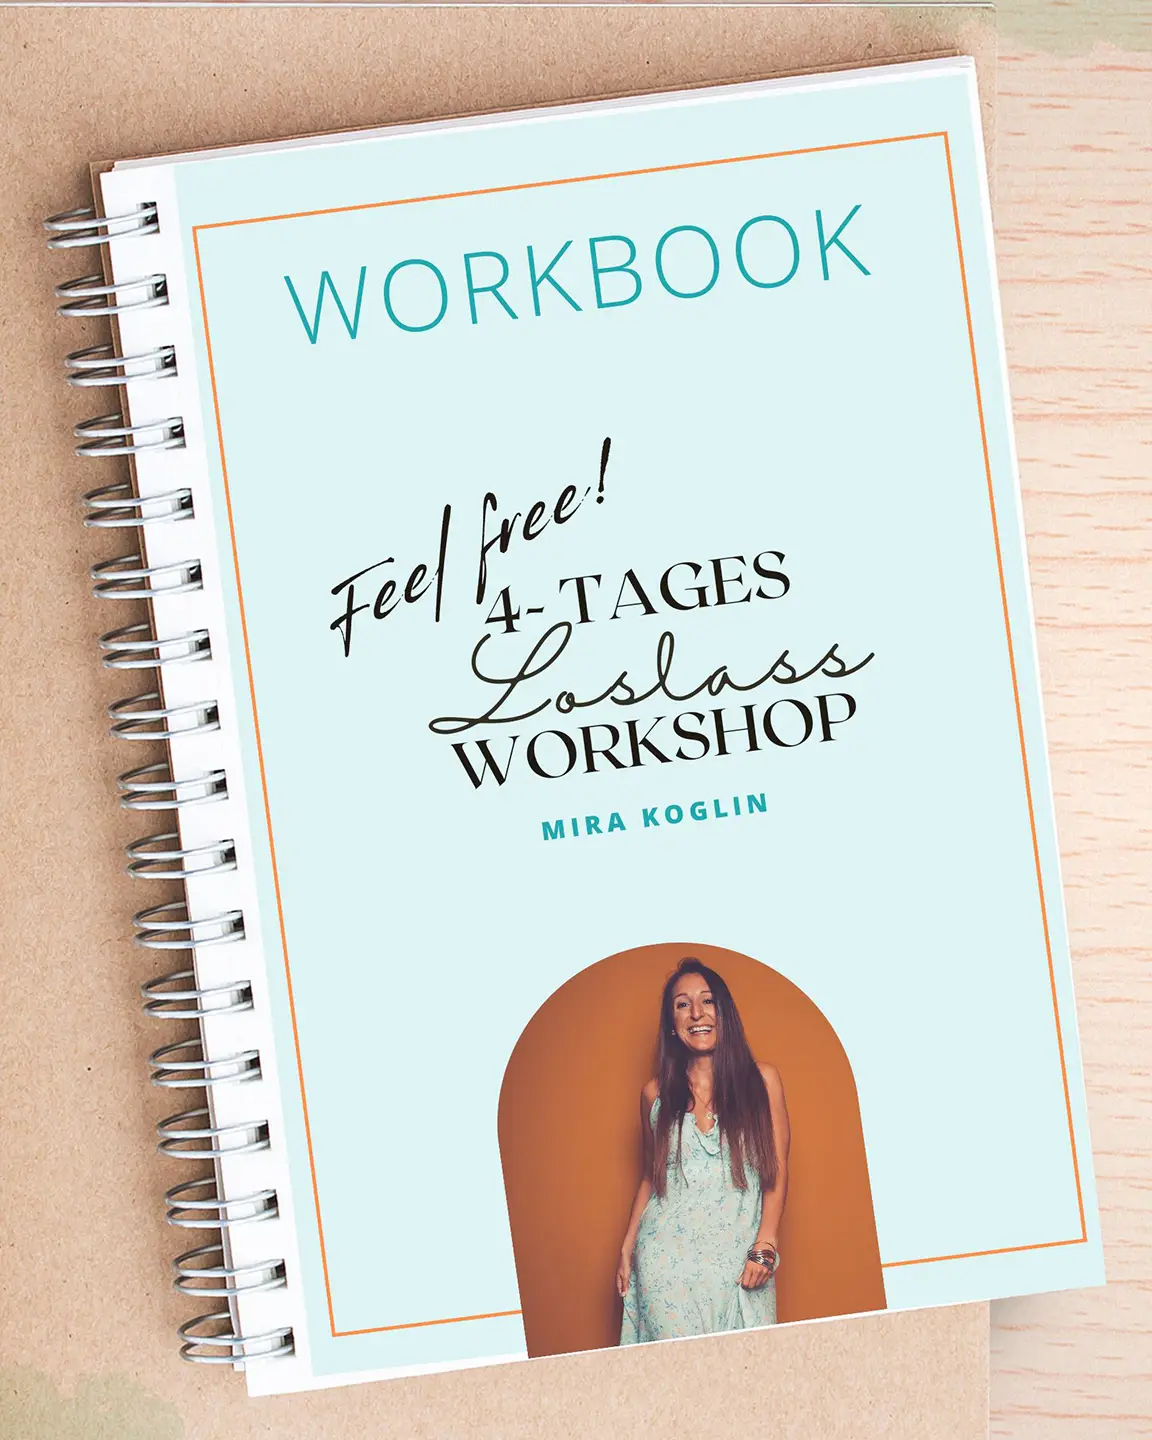 Loslass-workshop Mira Koglin Workbook